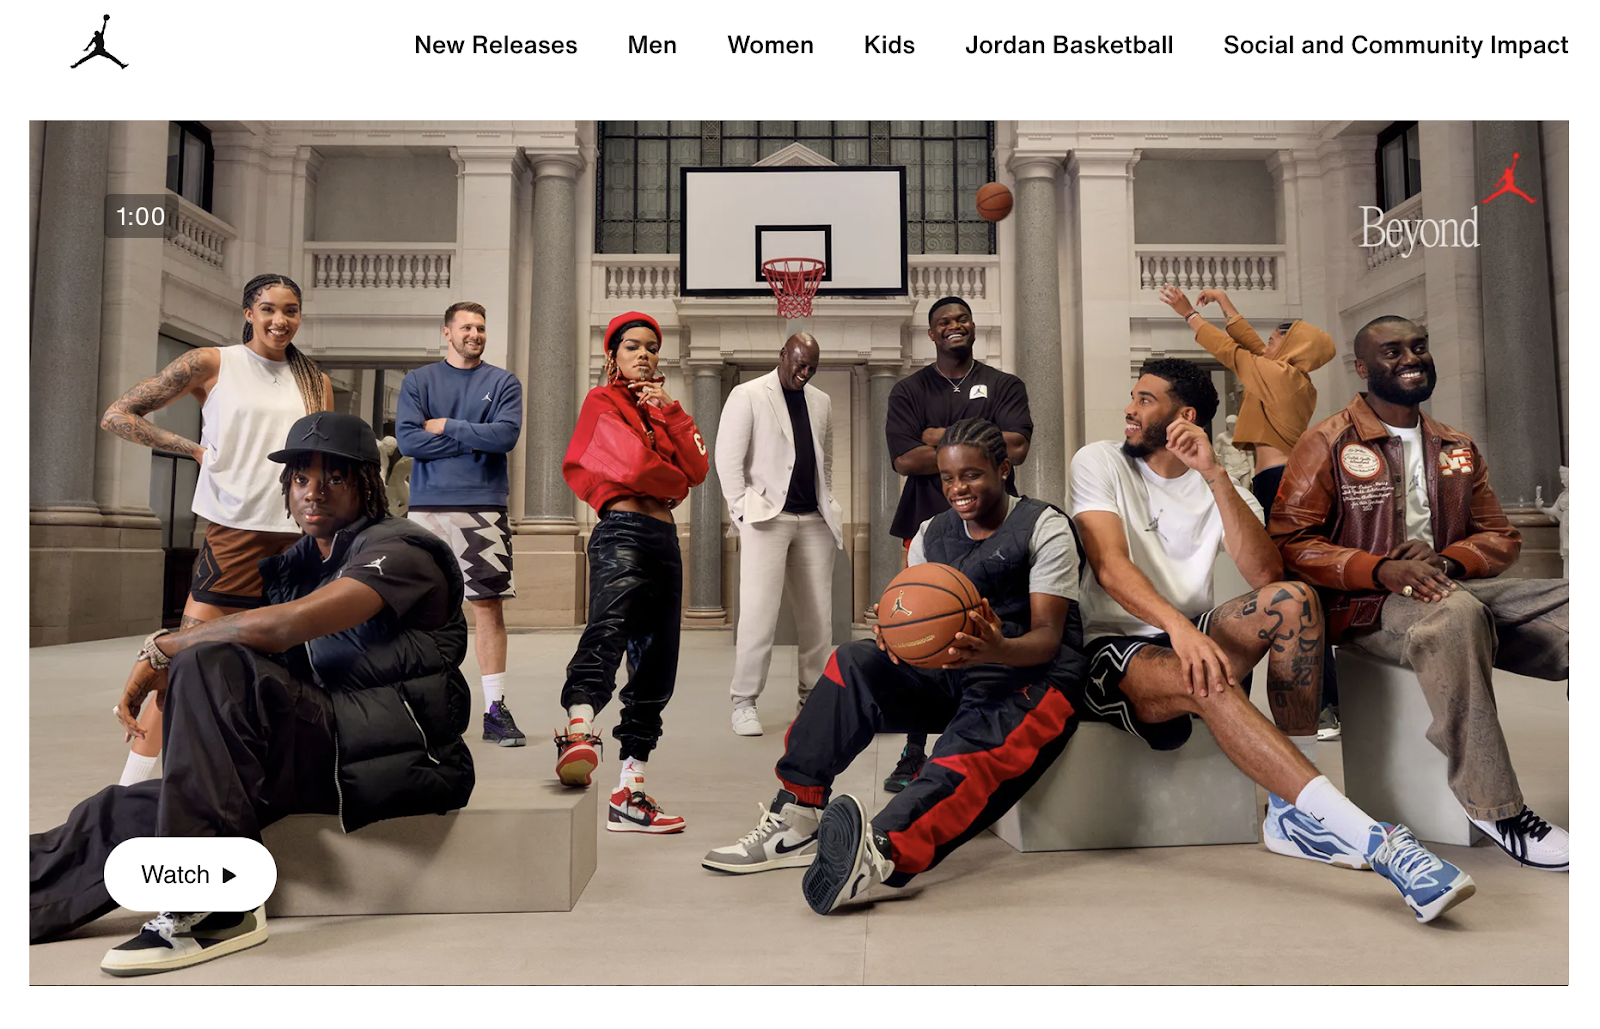 Michael Jordan’s endorsement of Nike video from the website